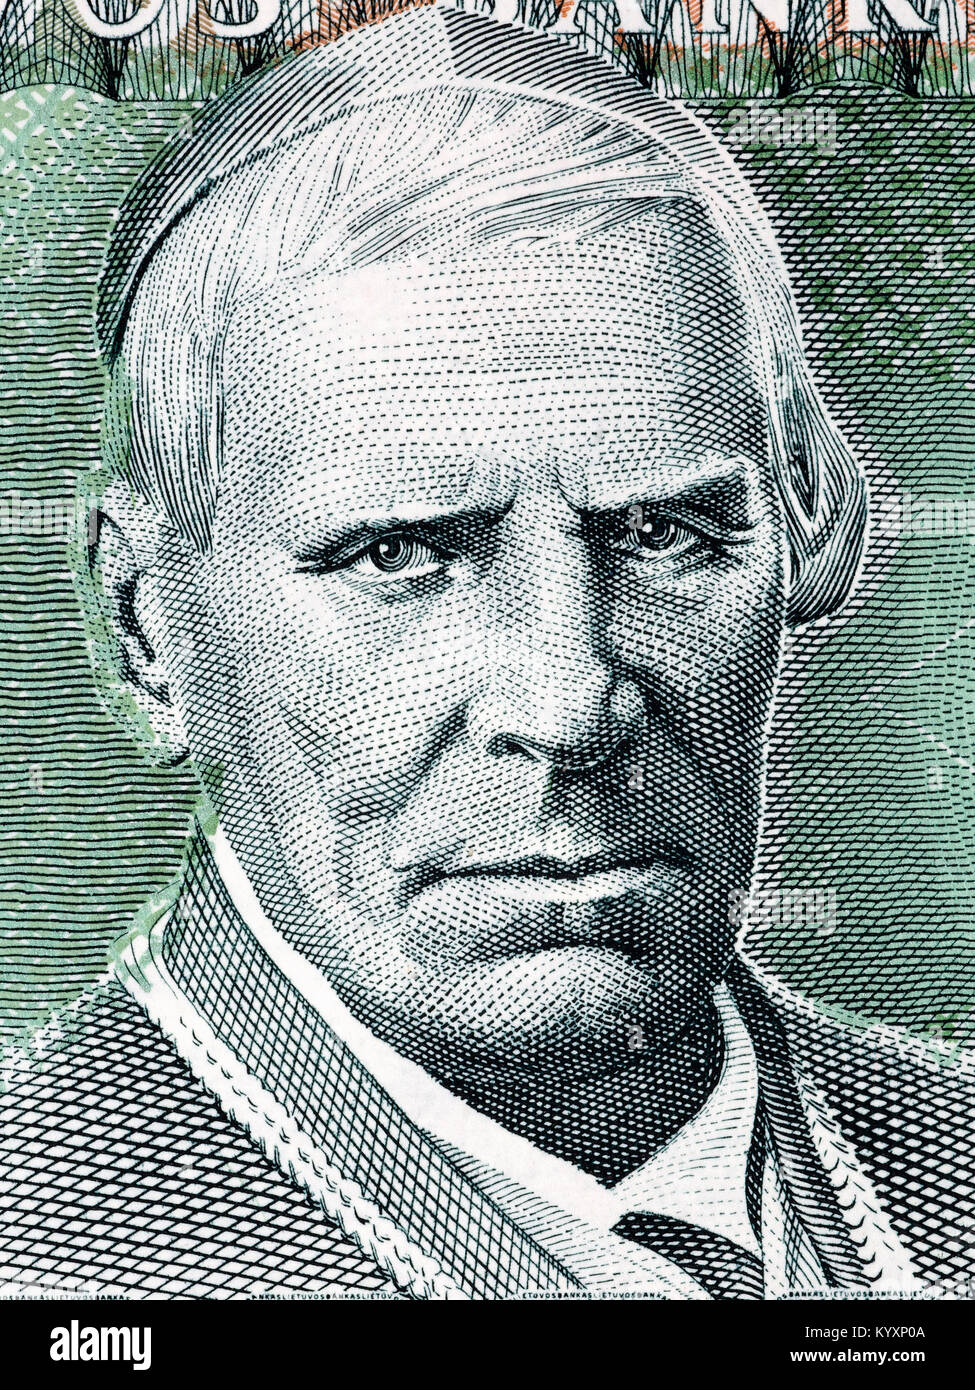 Motiejus Valancius portrait from Lithuanian money Stock Photo